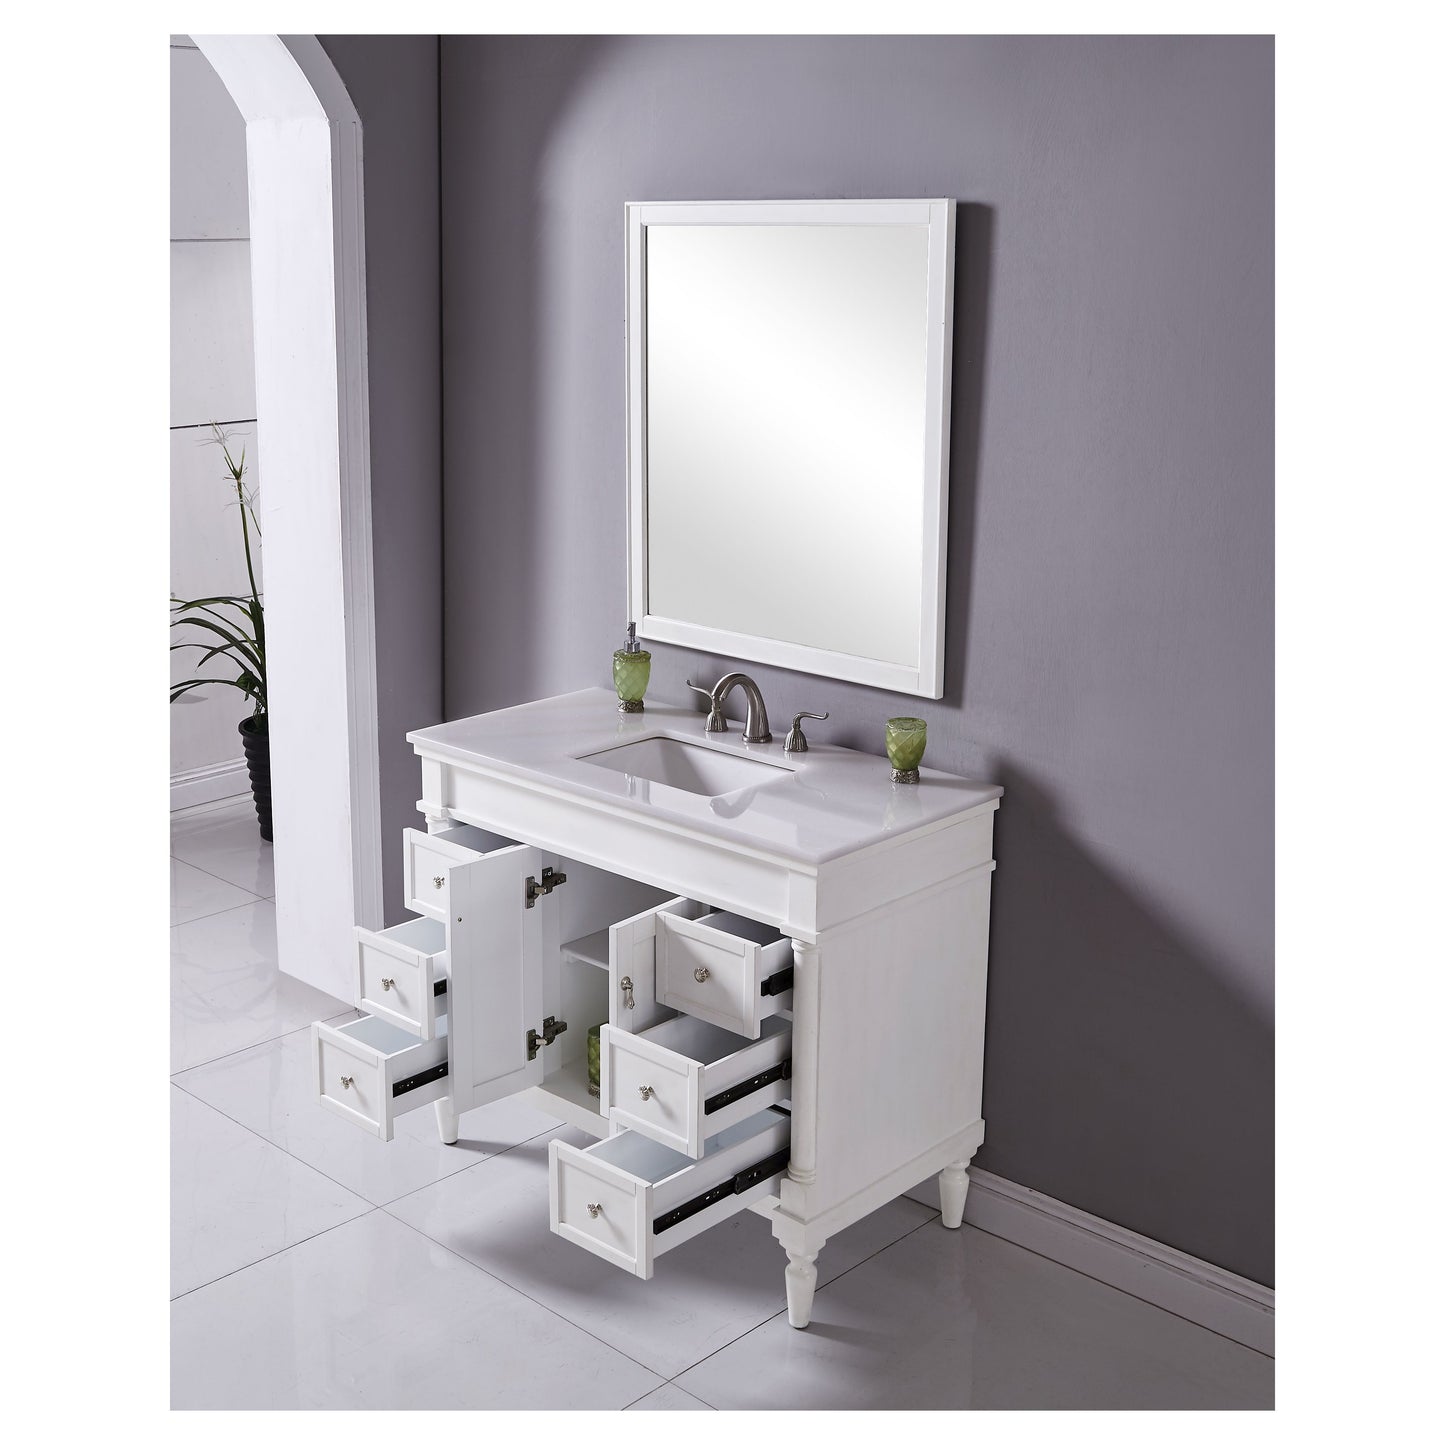 VF13042AW 42" Single Bathroom Vanity Set in Antique White